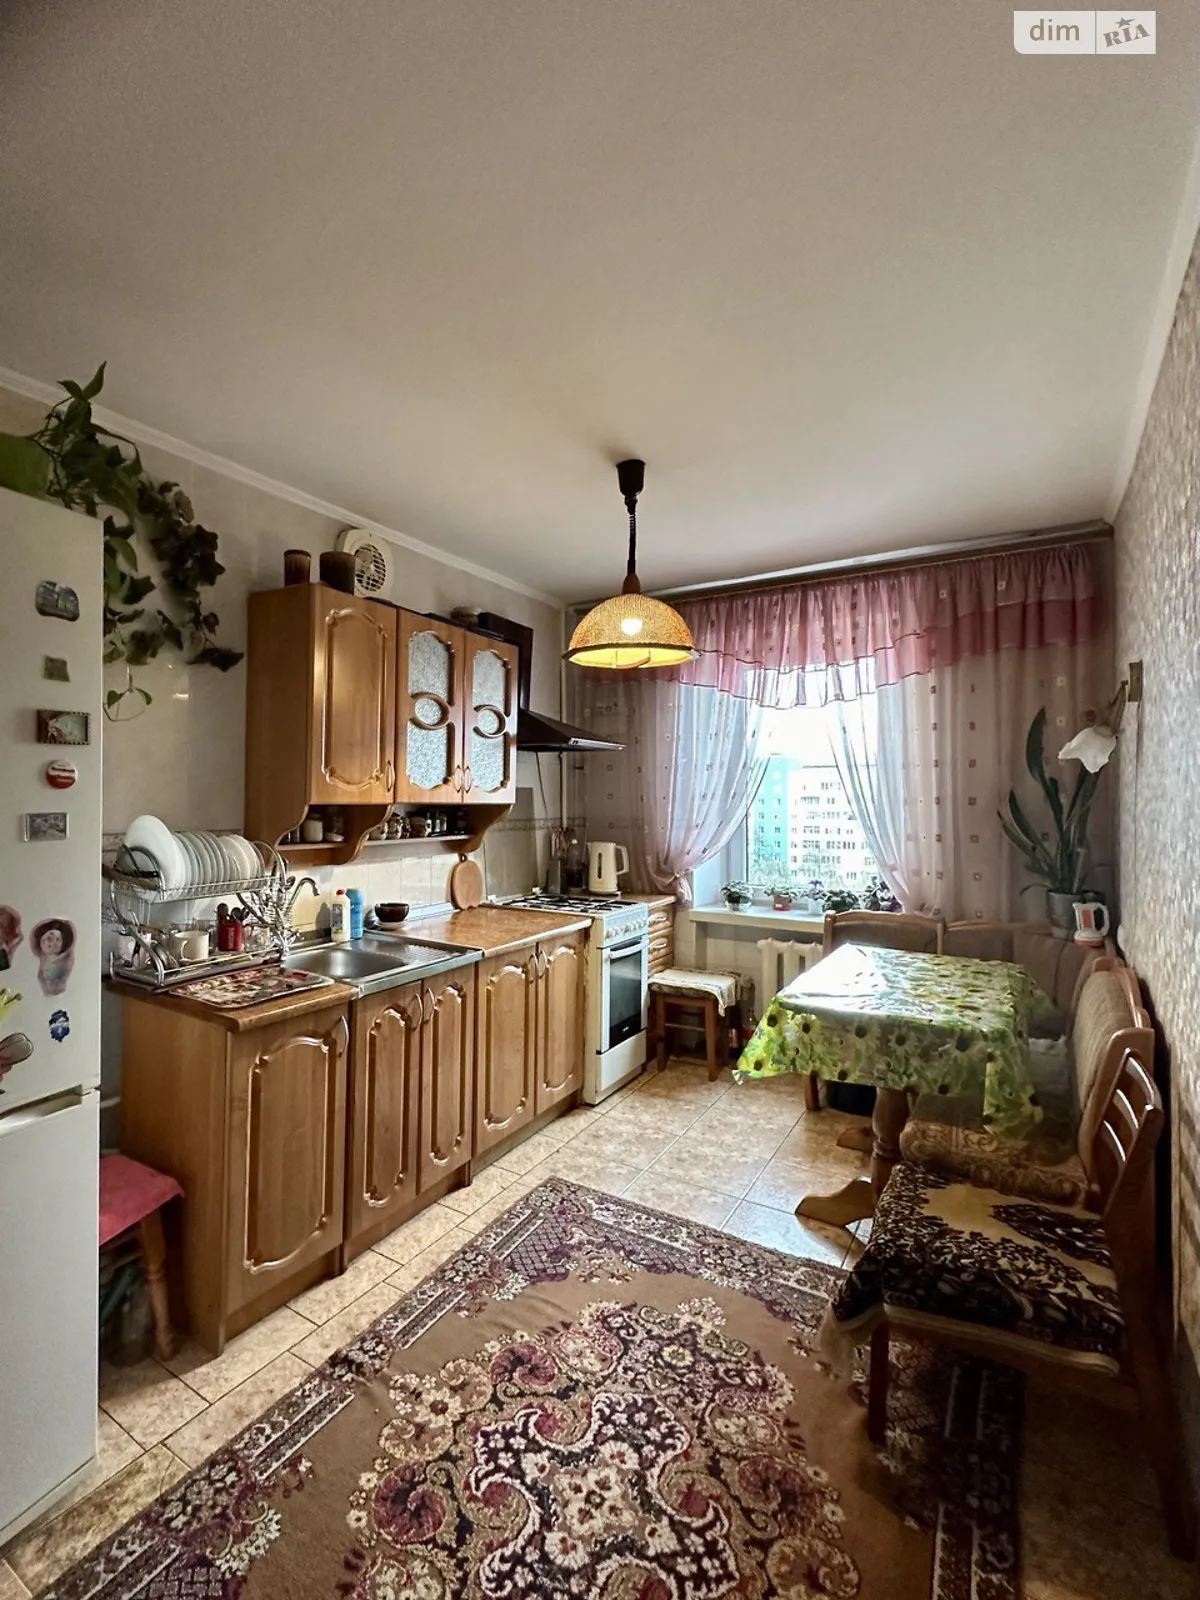 3-кімнатна квартира 66 кв. м у Луцьку, цена: 63000 $